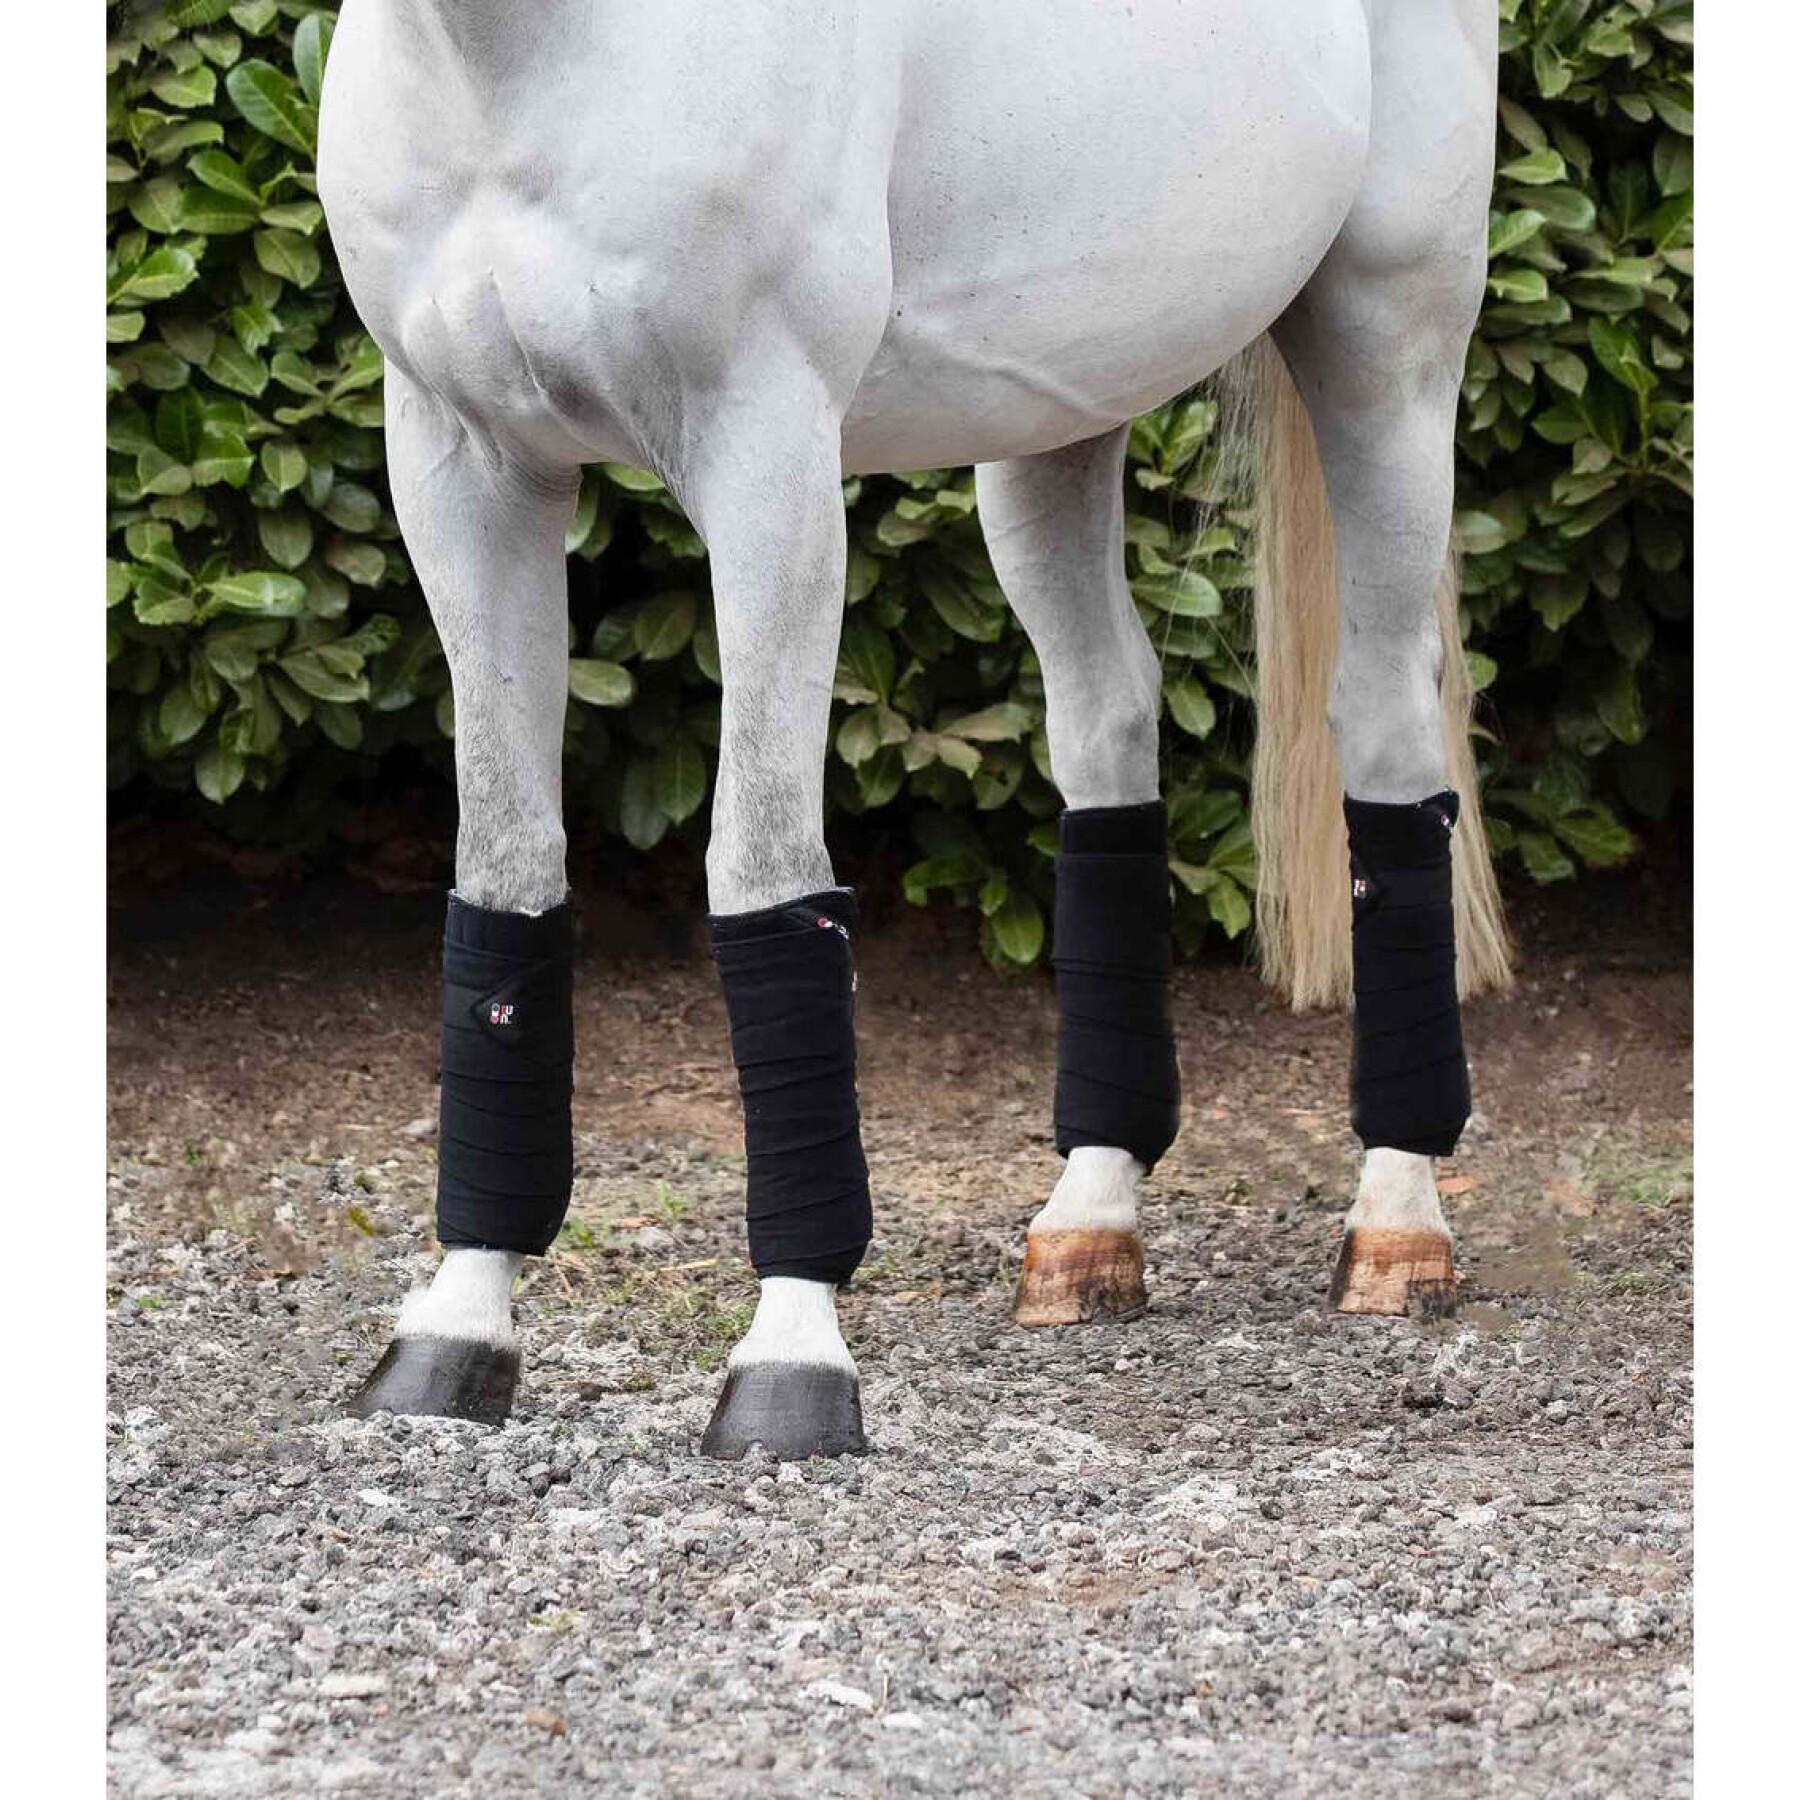 4er Pack Polobänder für Pferde Premier Equine